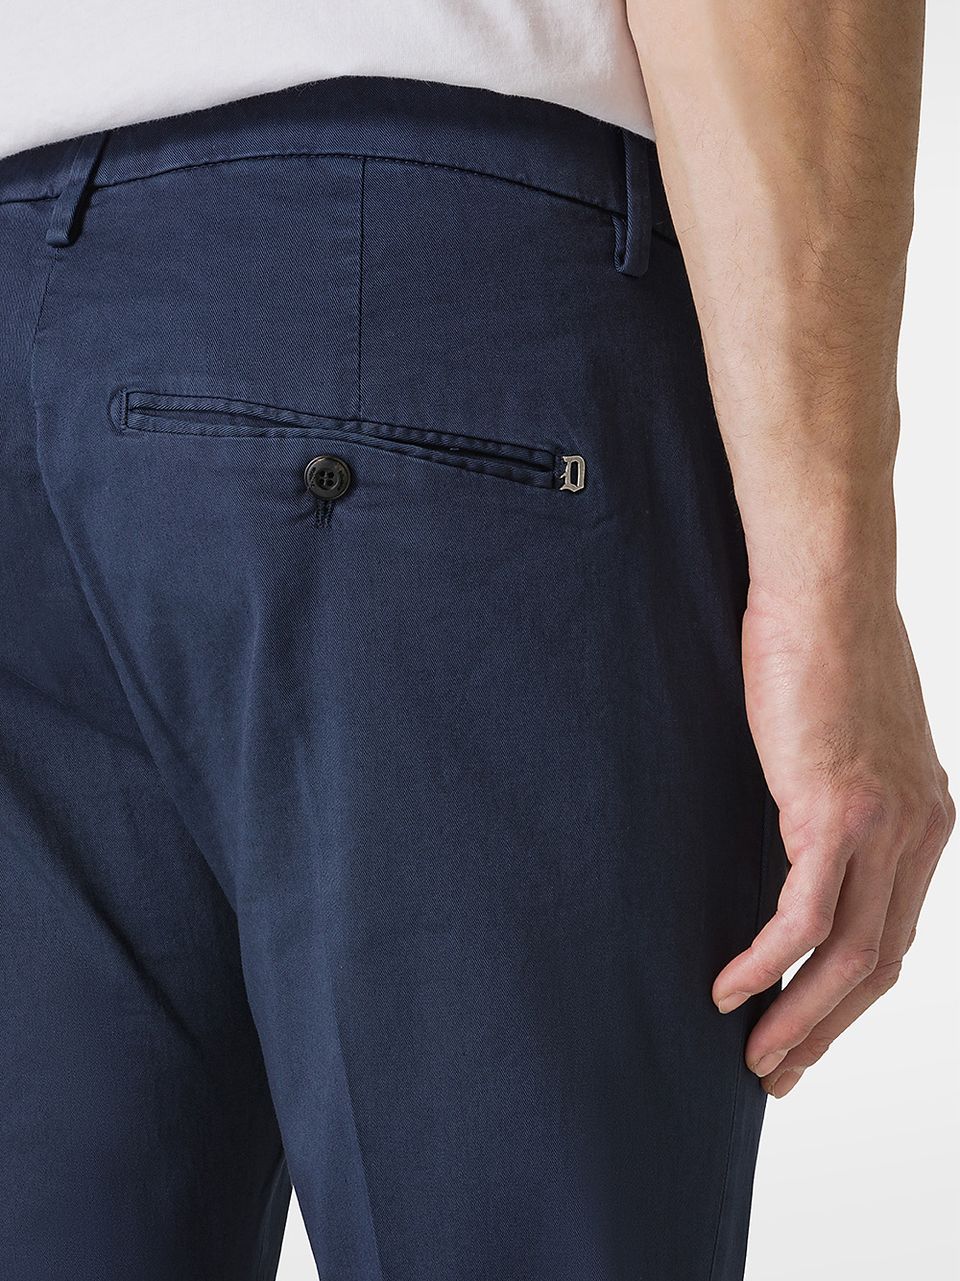 Pantaloni Gaubert in cotone stretch slim chino